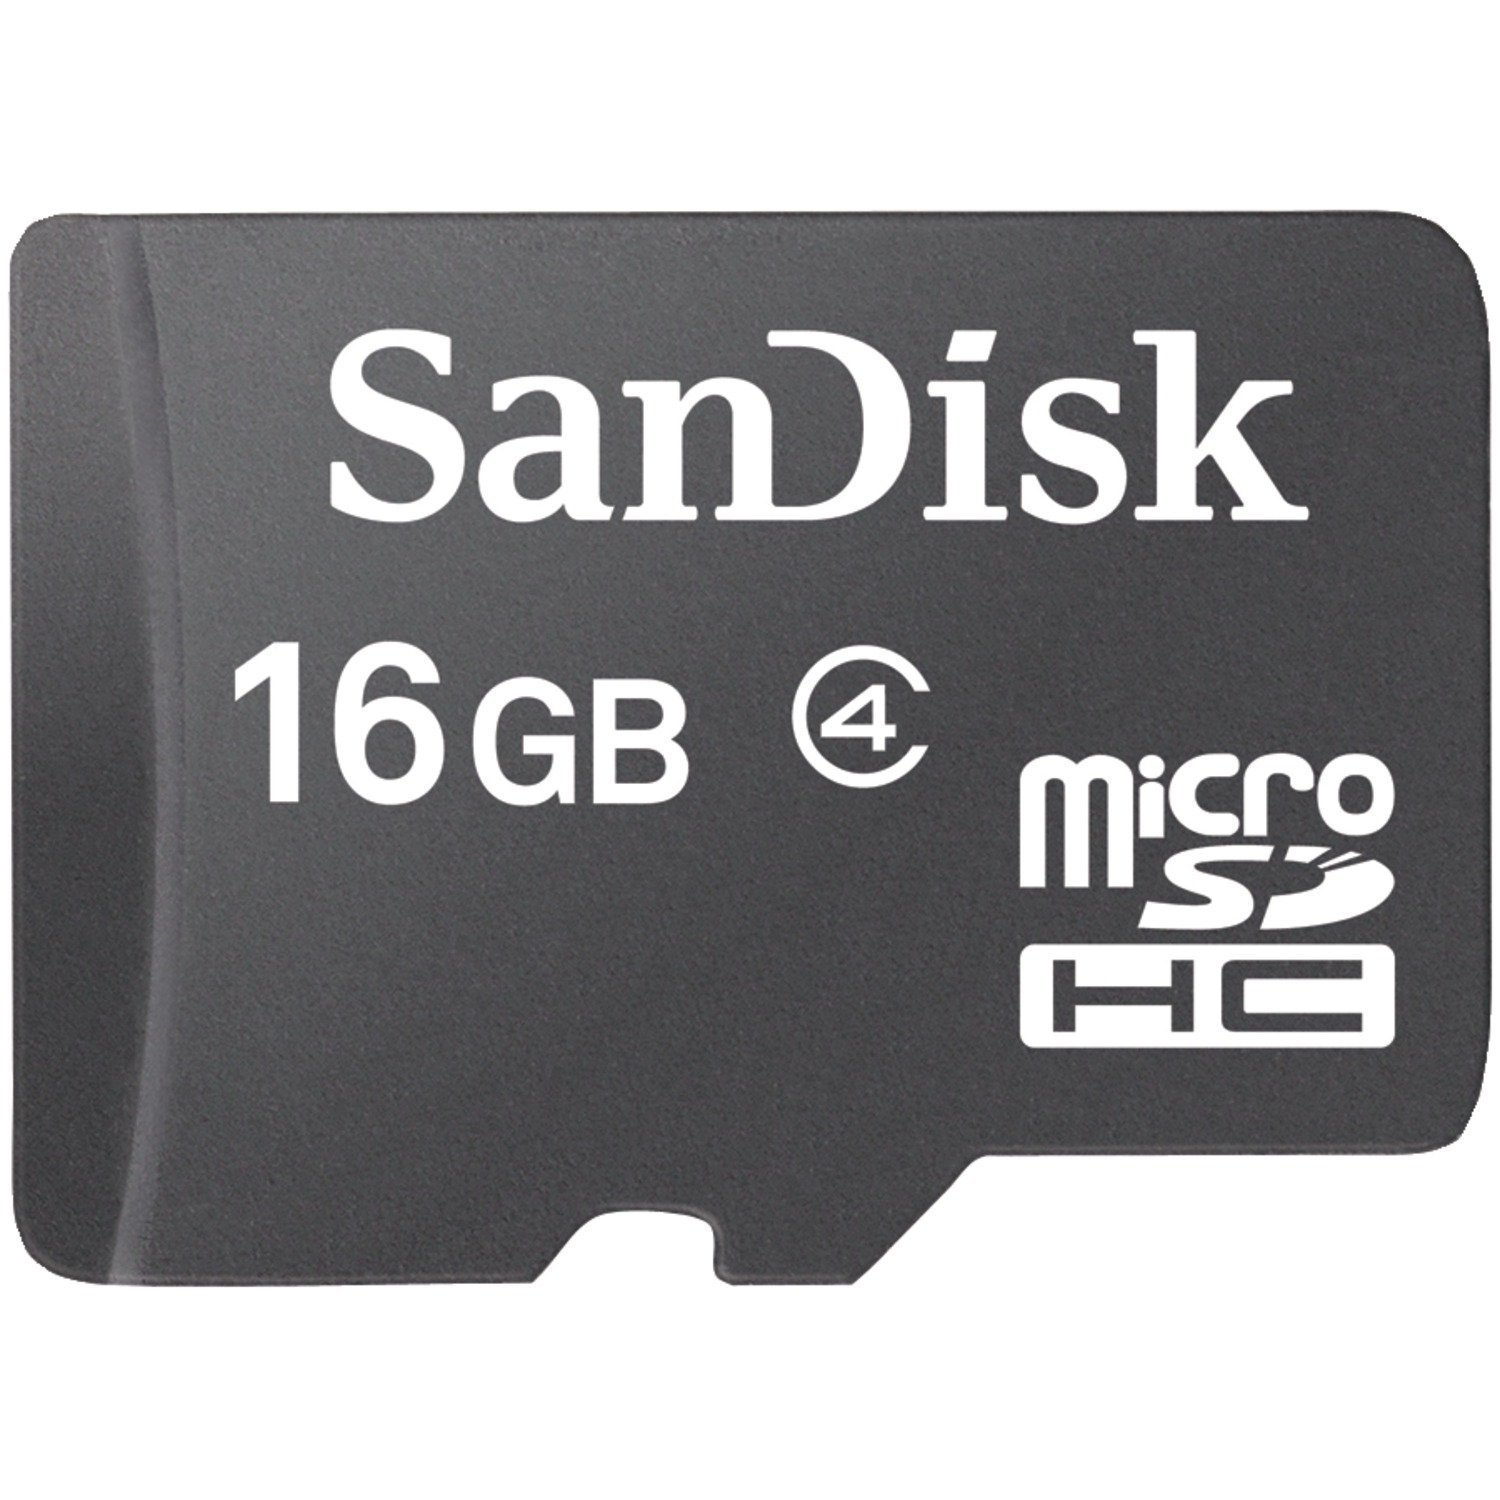 Amazon.com: 16GB Sandisk microSD Flash Memory Card + SD Adapter ...